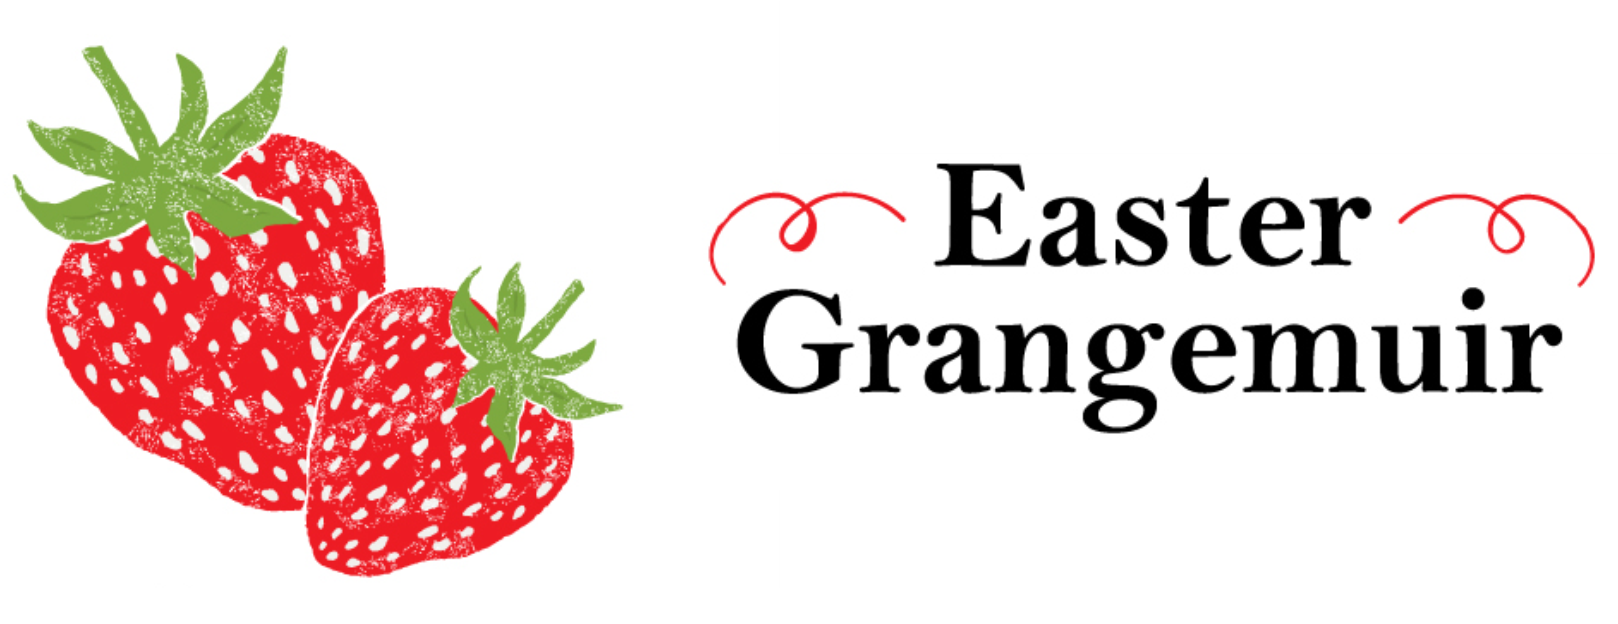 Easter Grangemuir Farm